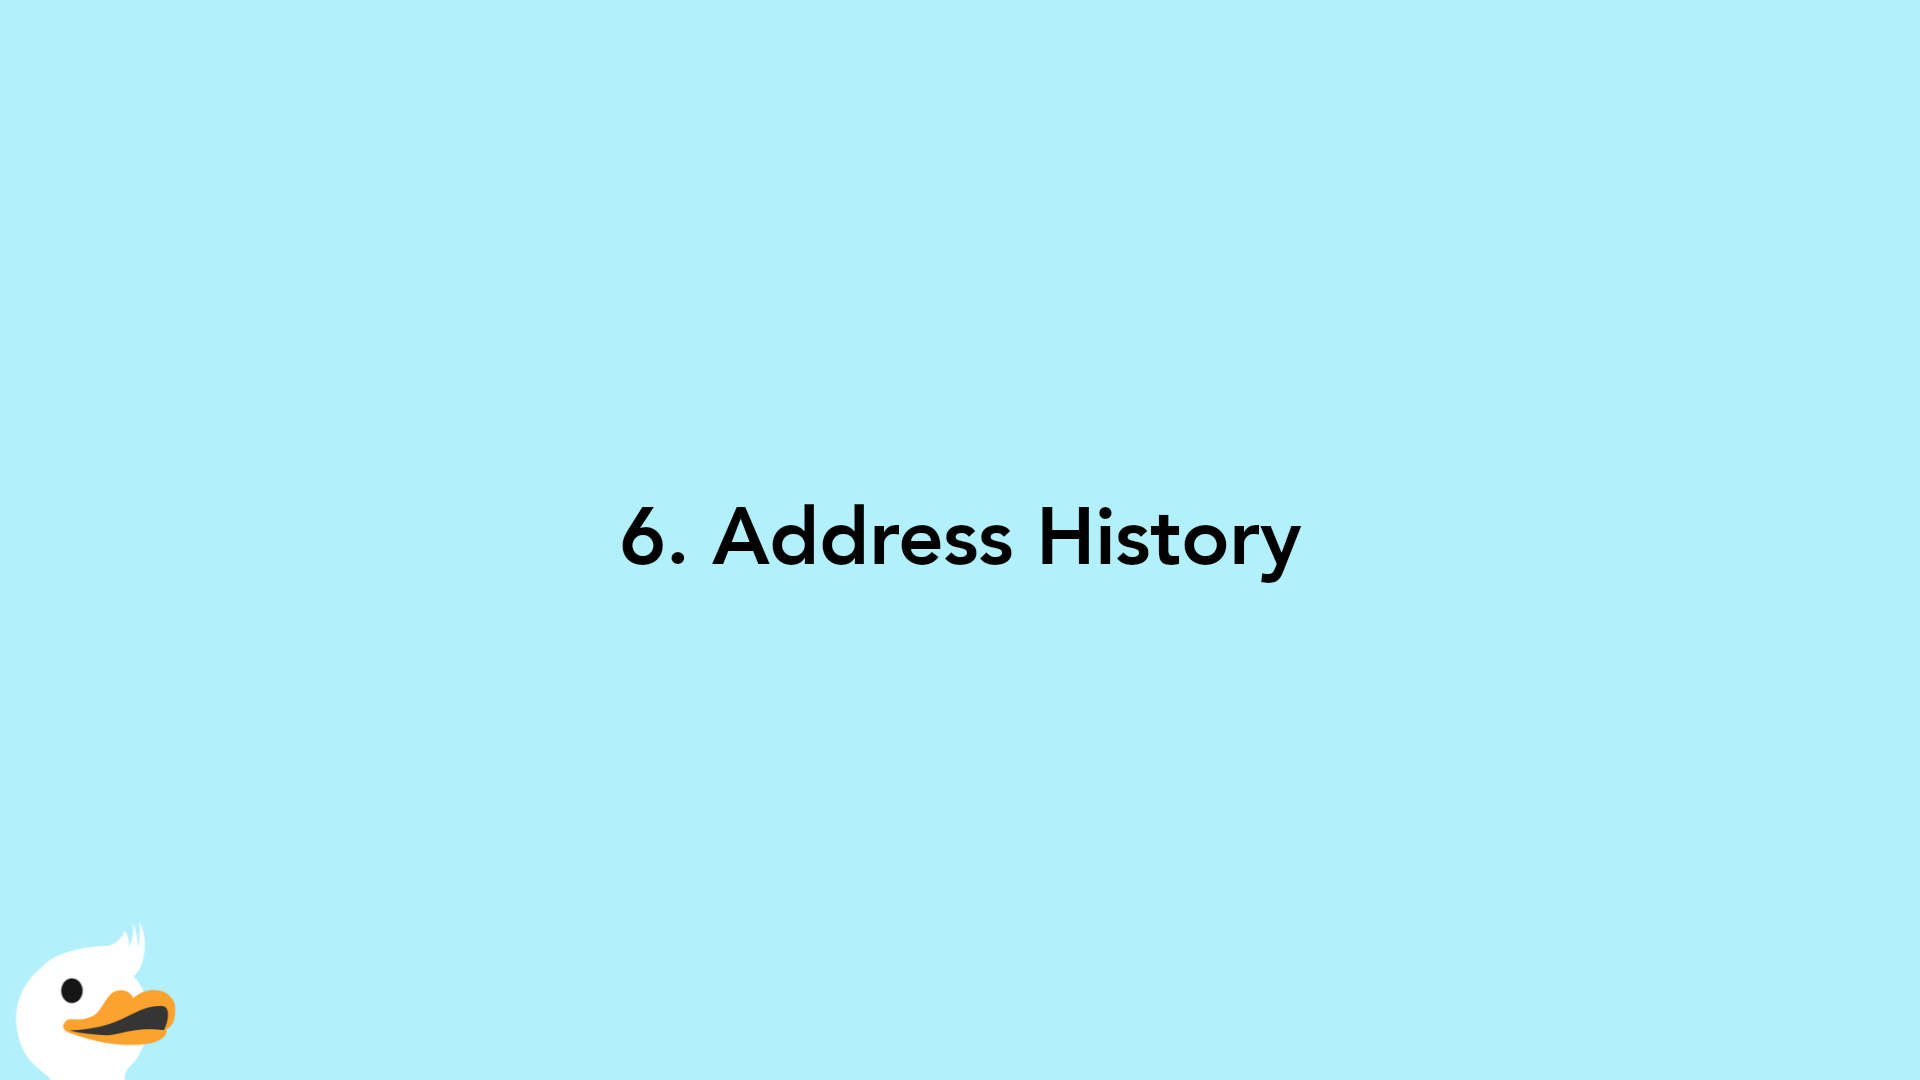 6. Address History